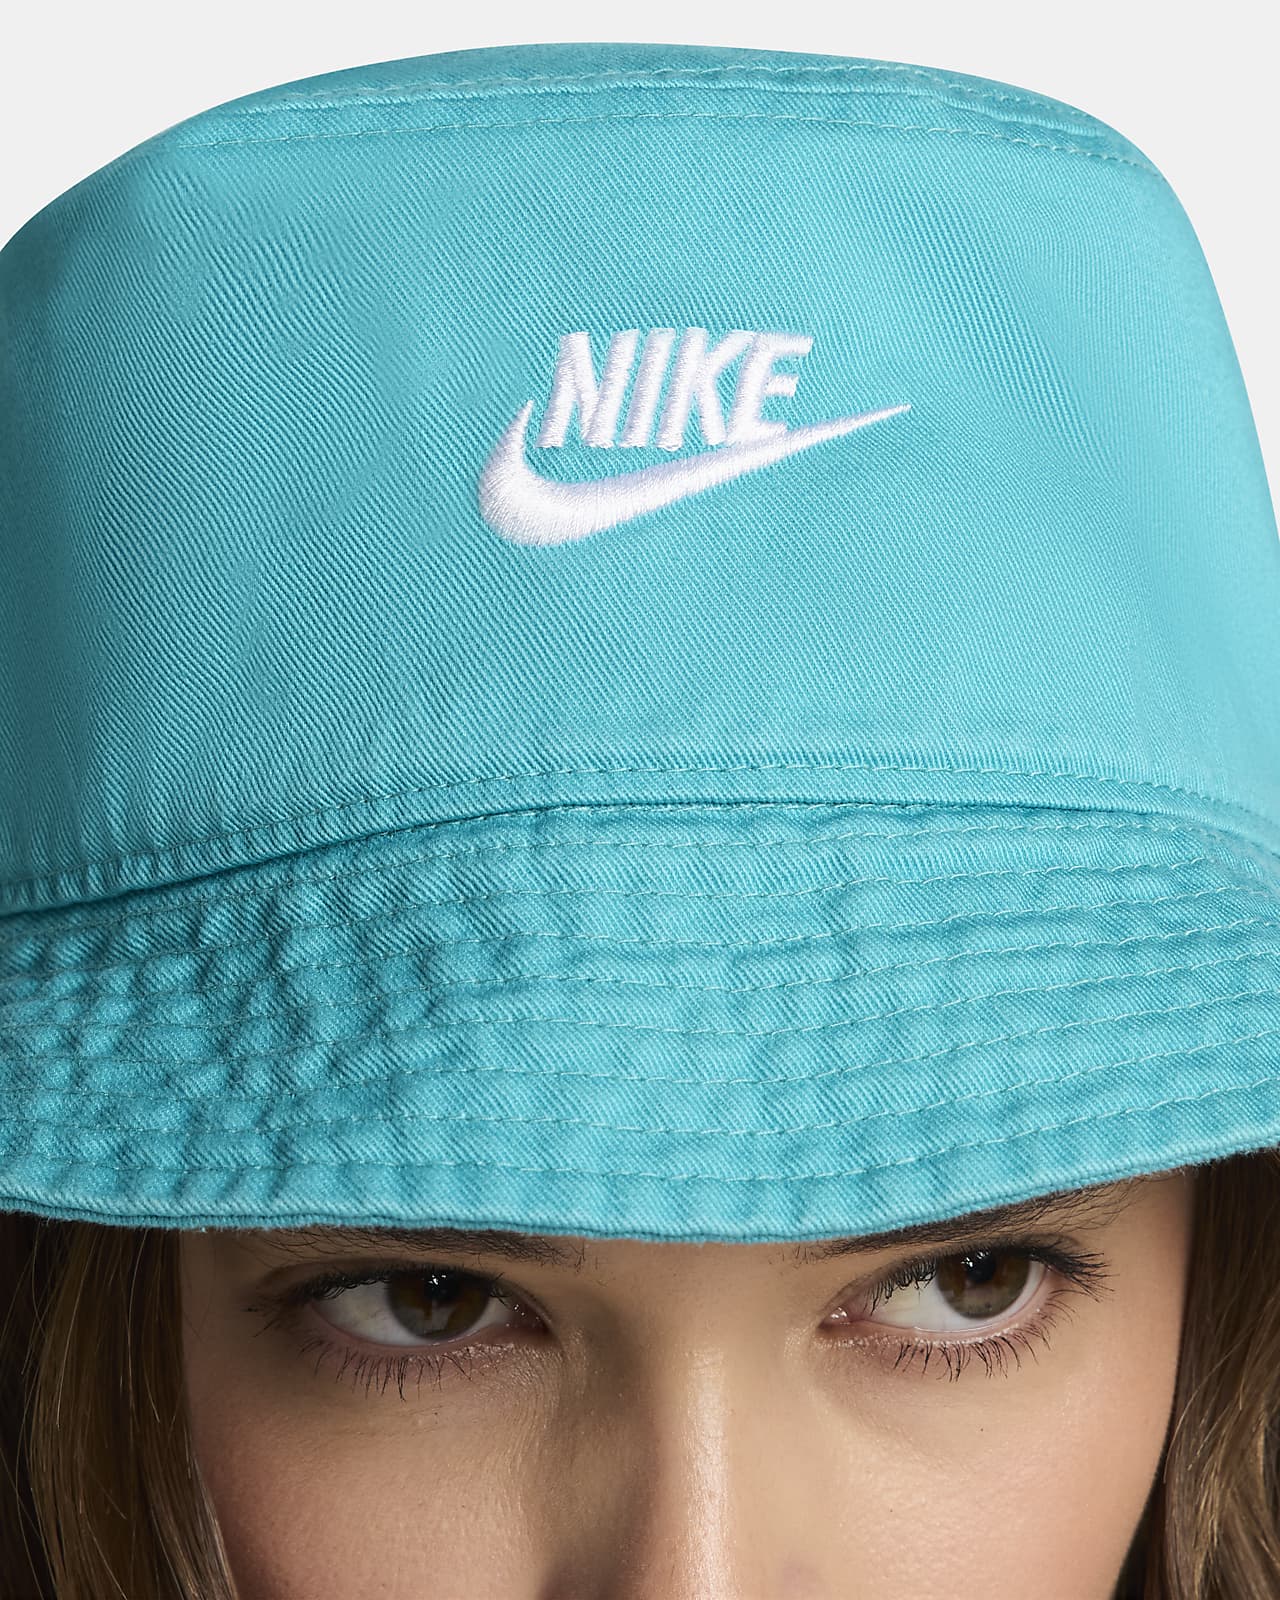 Nike Apex Futura Washed Bucket Hat